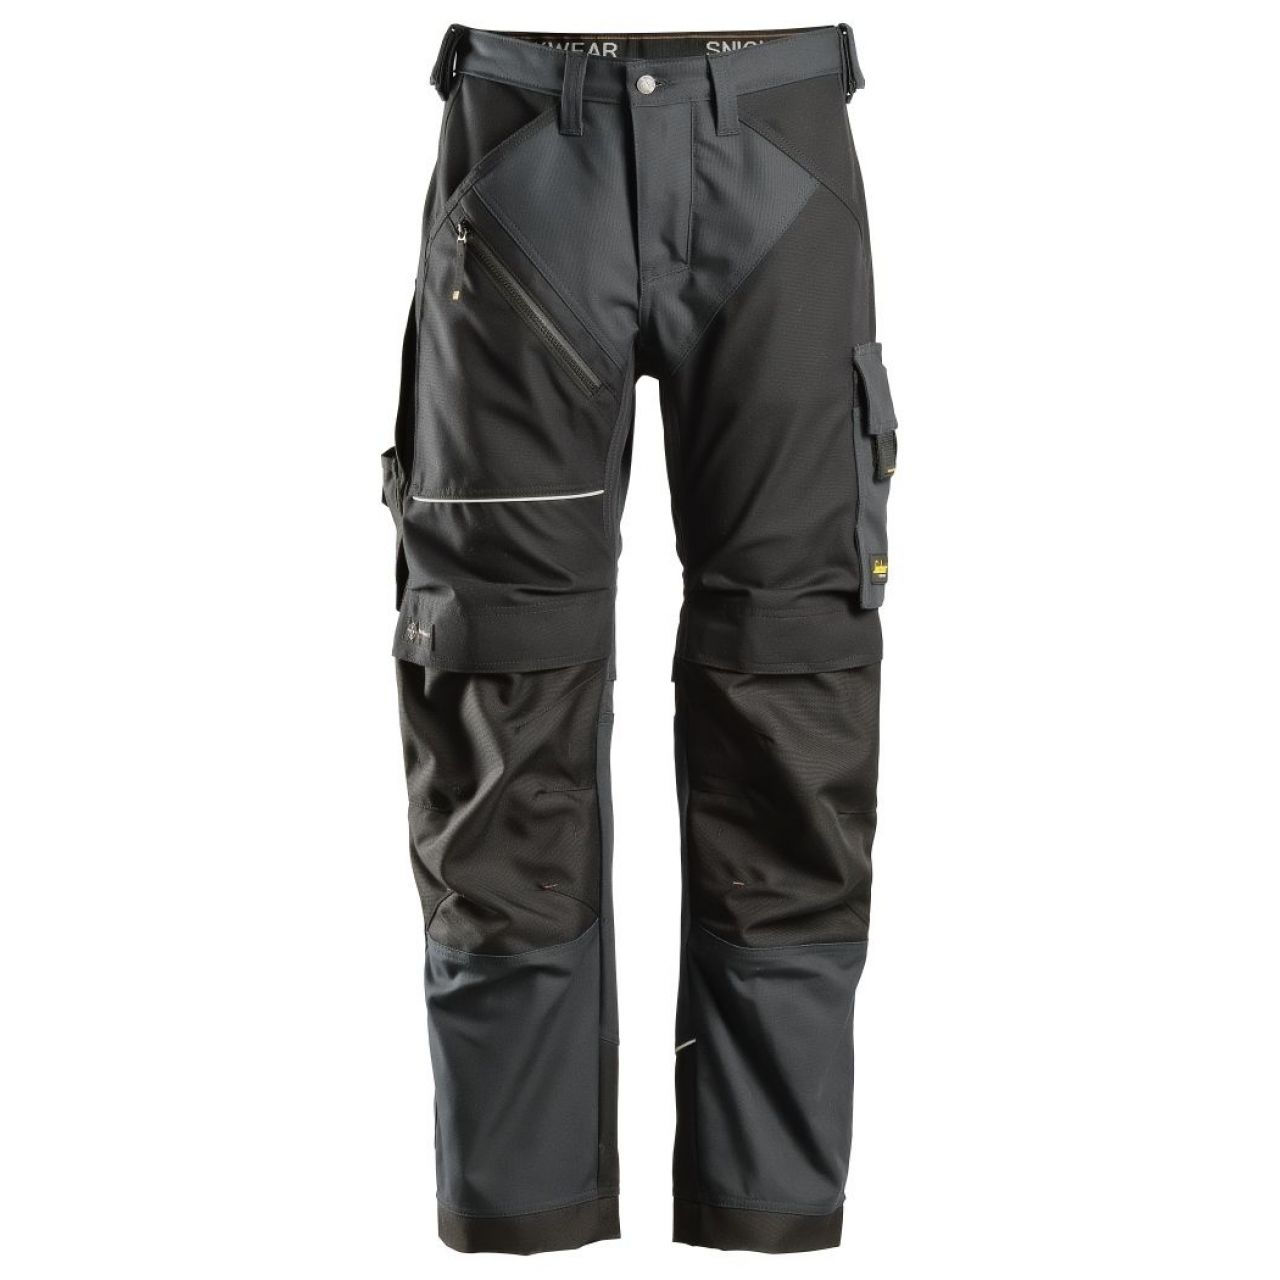 Pantalon Canvas+ RuffWork gris acero-negro talla 062